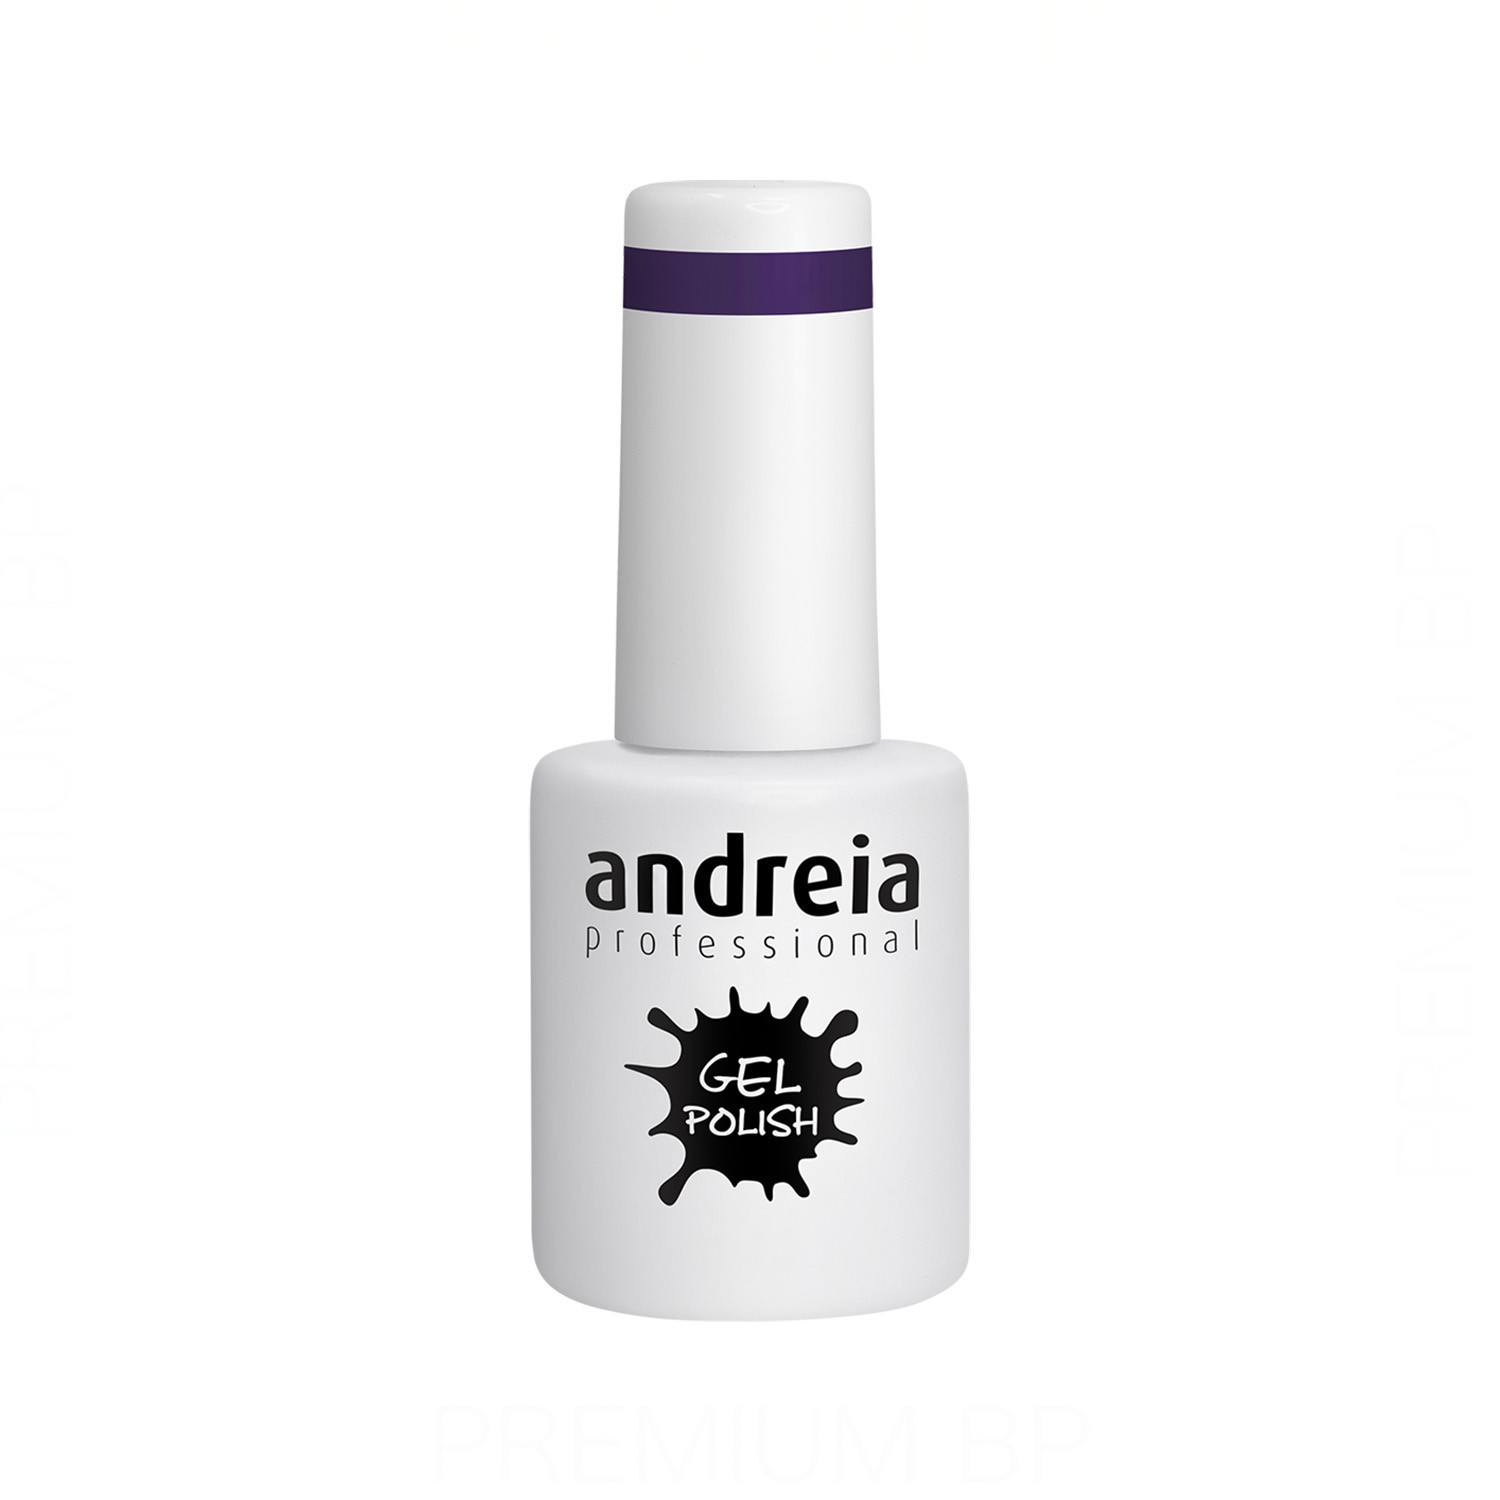 Andreia - Andreia professional gel polish esmalte semipermanente 10,5 ml color 299, esmalte semipermanente con duración de 4 semanas color morado oscuro